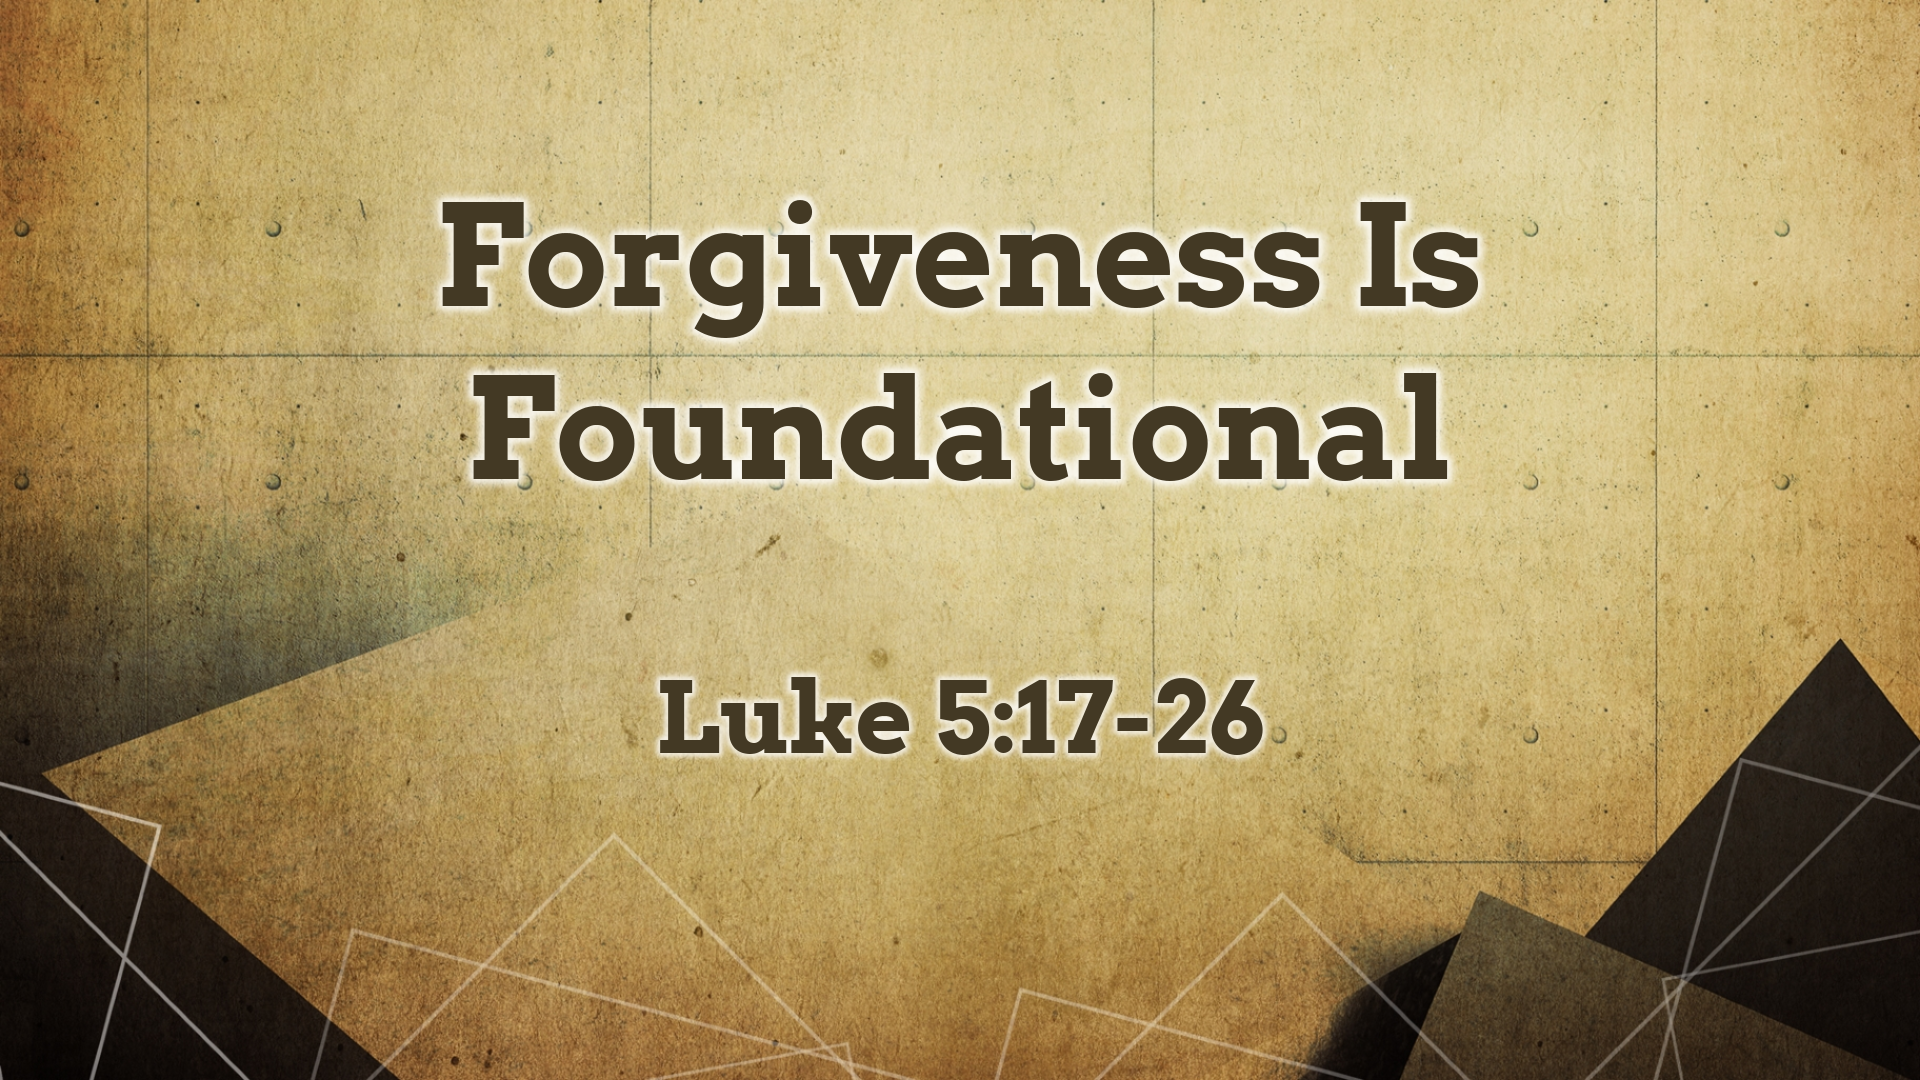 Aug 30, 2020 - Forgiveness Is Foundational (Video) - Luke 5: 17-26